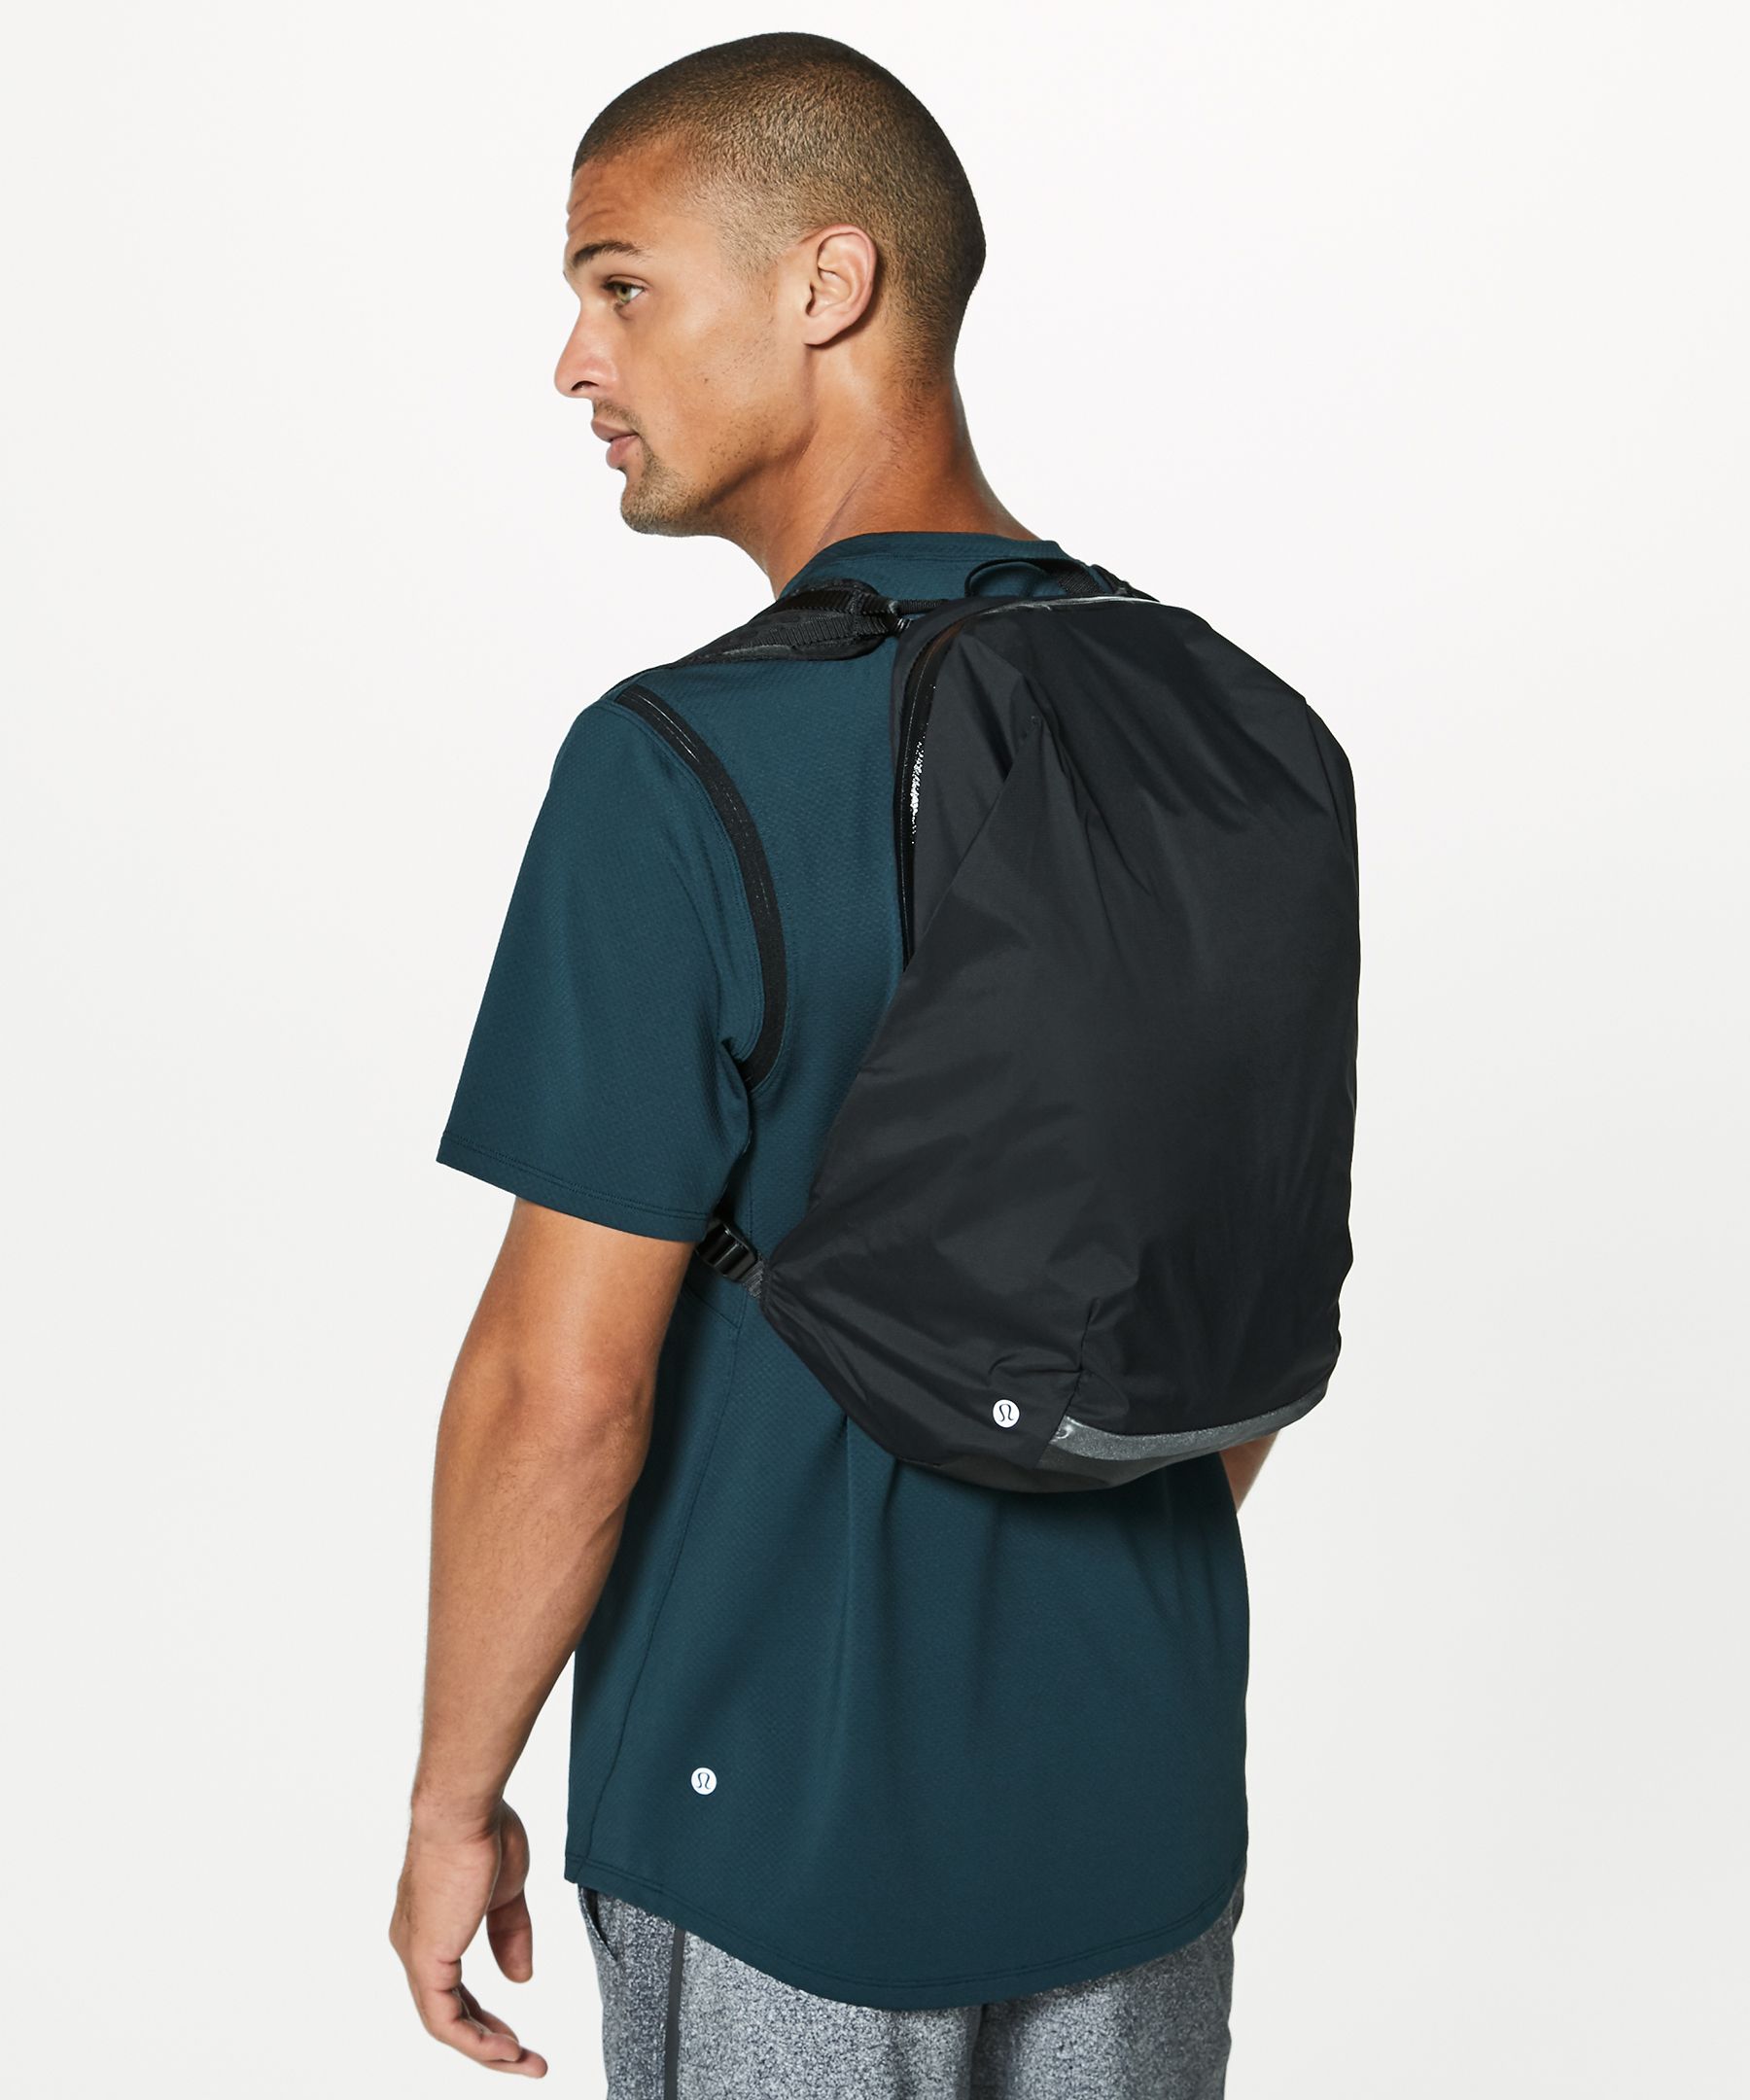 Surge Run Backpack II | Men's Bags 